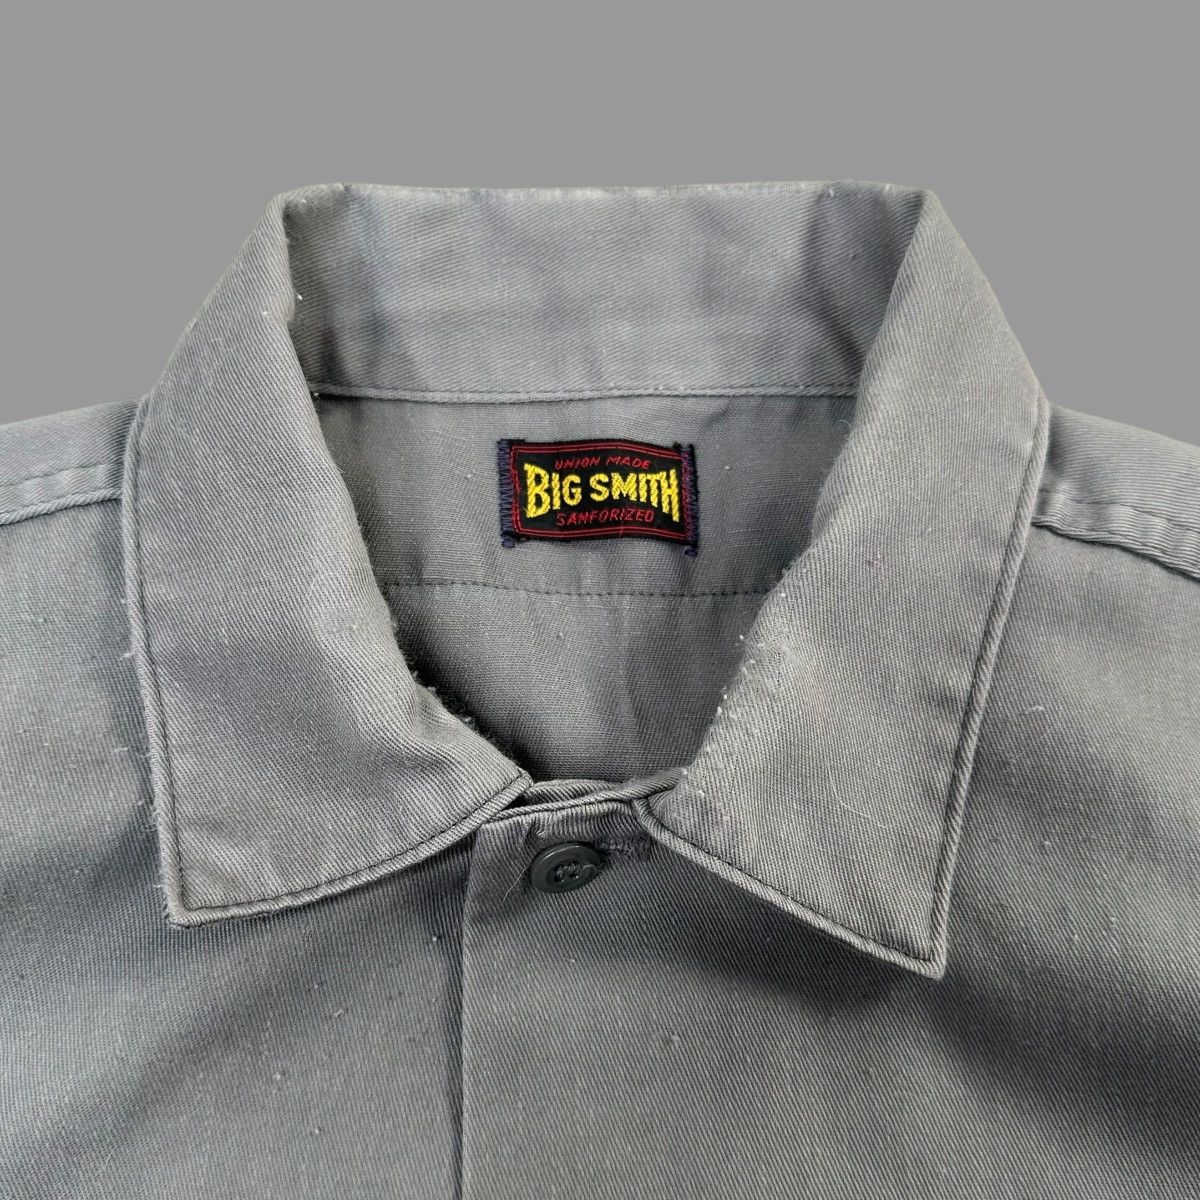 Vintage Vintage 1950s big smith mechanic work shirt Size US M / EU 48-50 / 2 - 4 Thumbnail